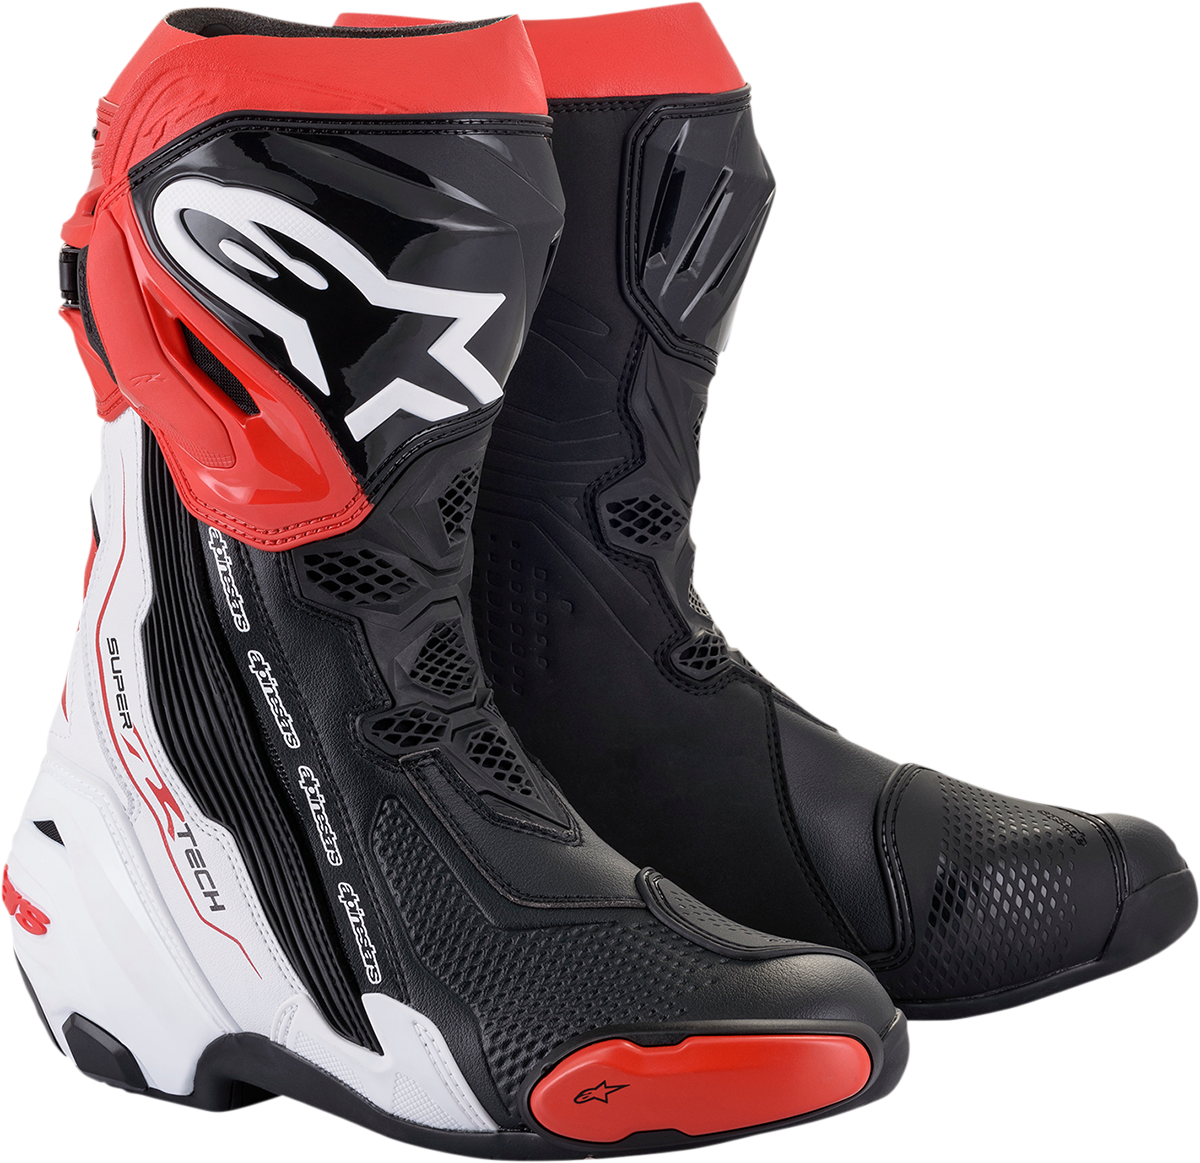 ALPINESTARS Supertech R Boots - Black/White/Red - US 6.5 / EU 40 2220021-123-40